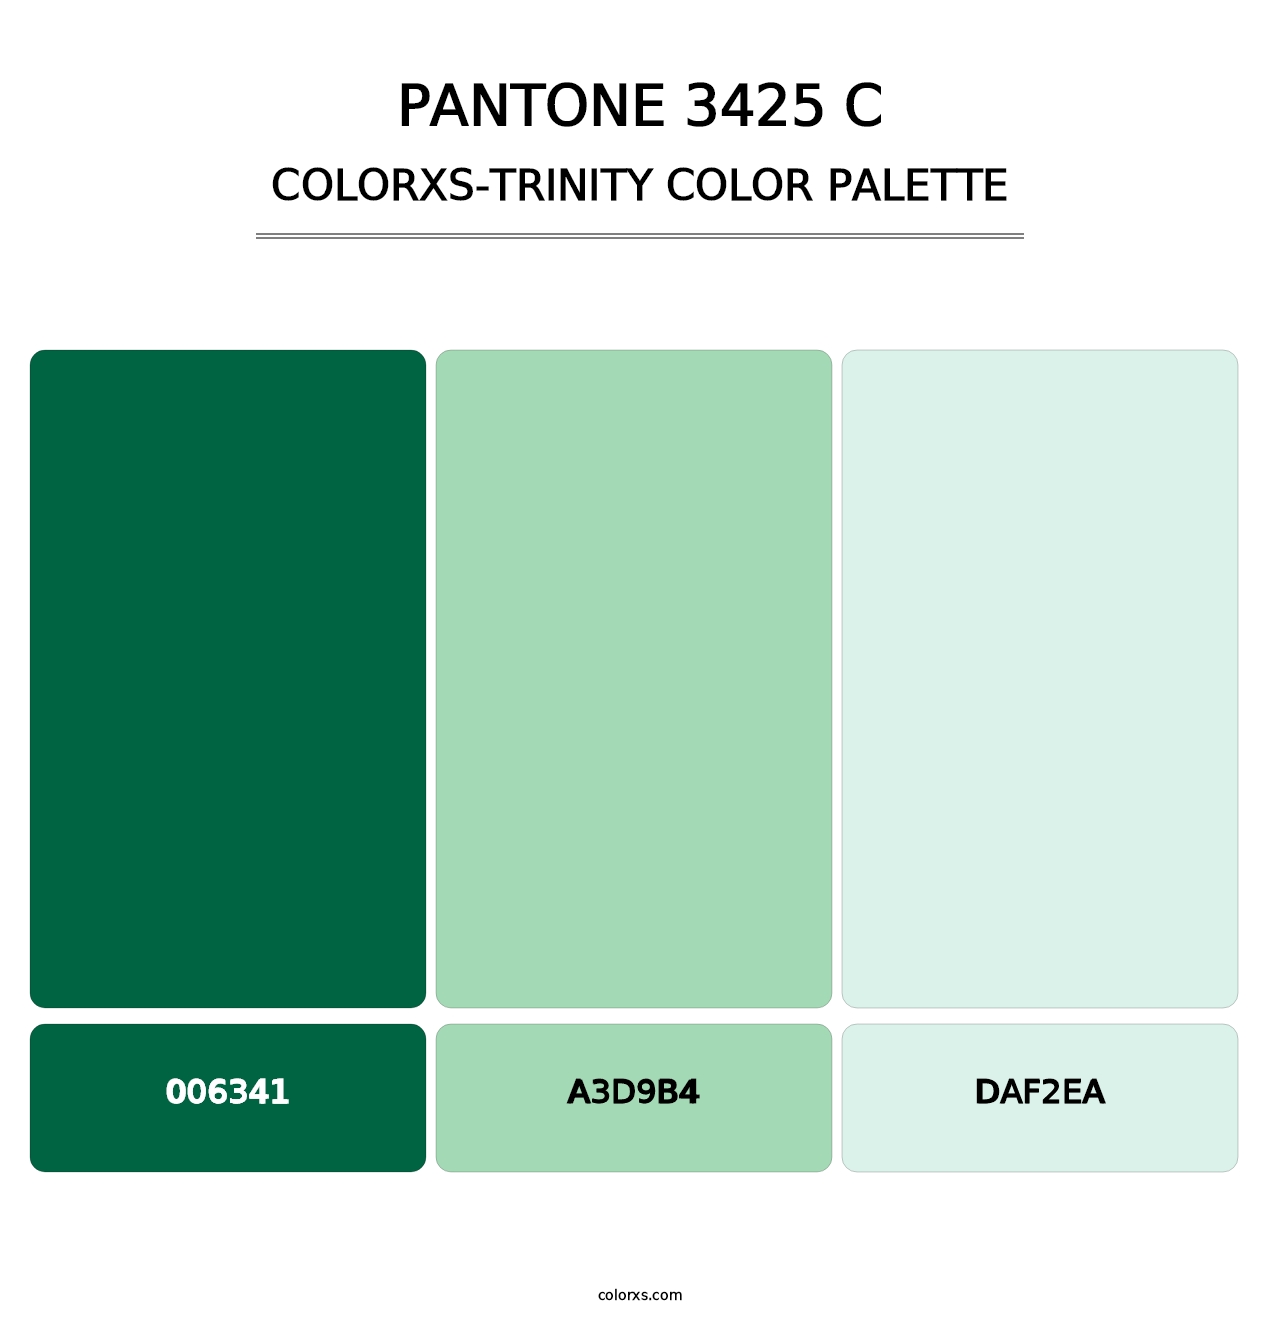 PANTONE 3425 C - Colorxs Trinity Palette